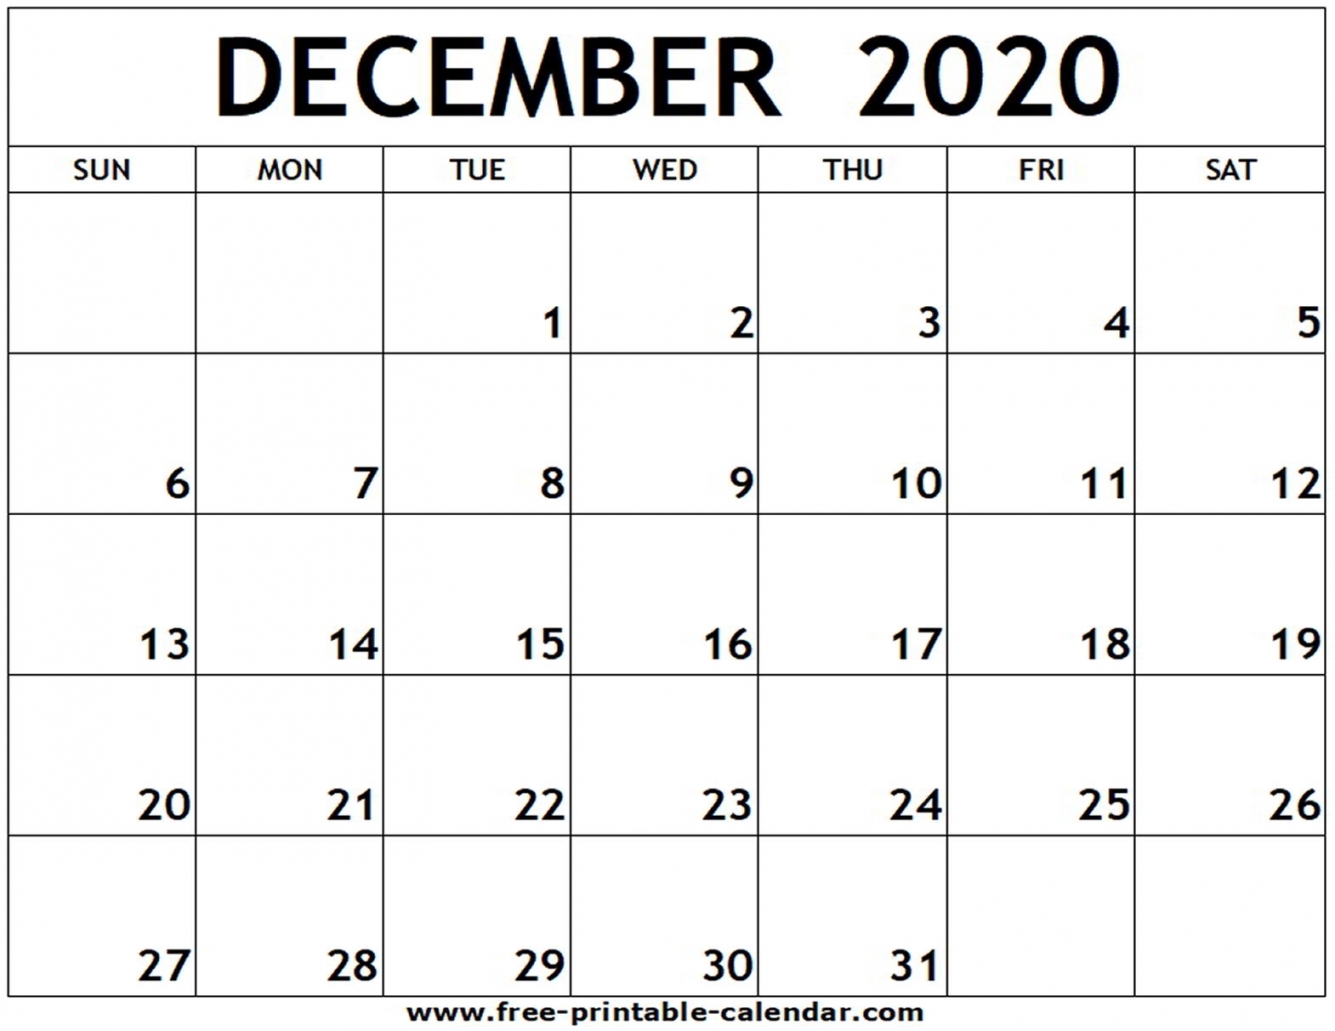 December 2020 Printable Calendar